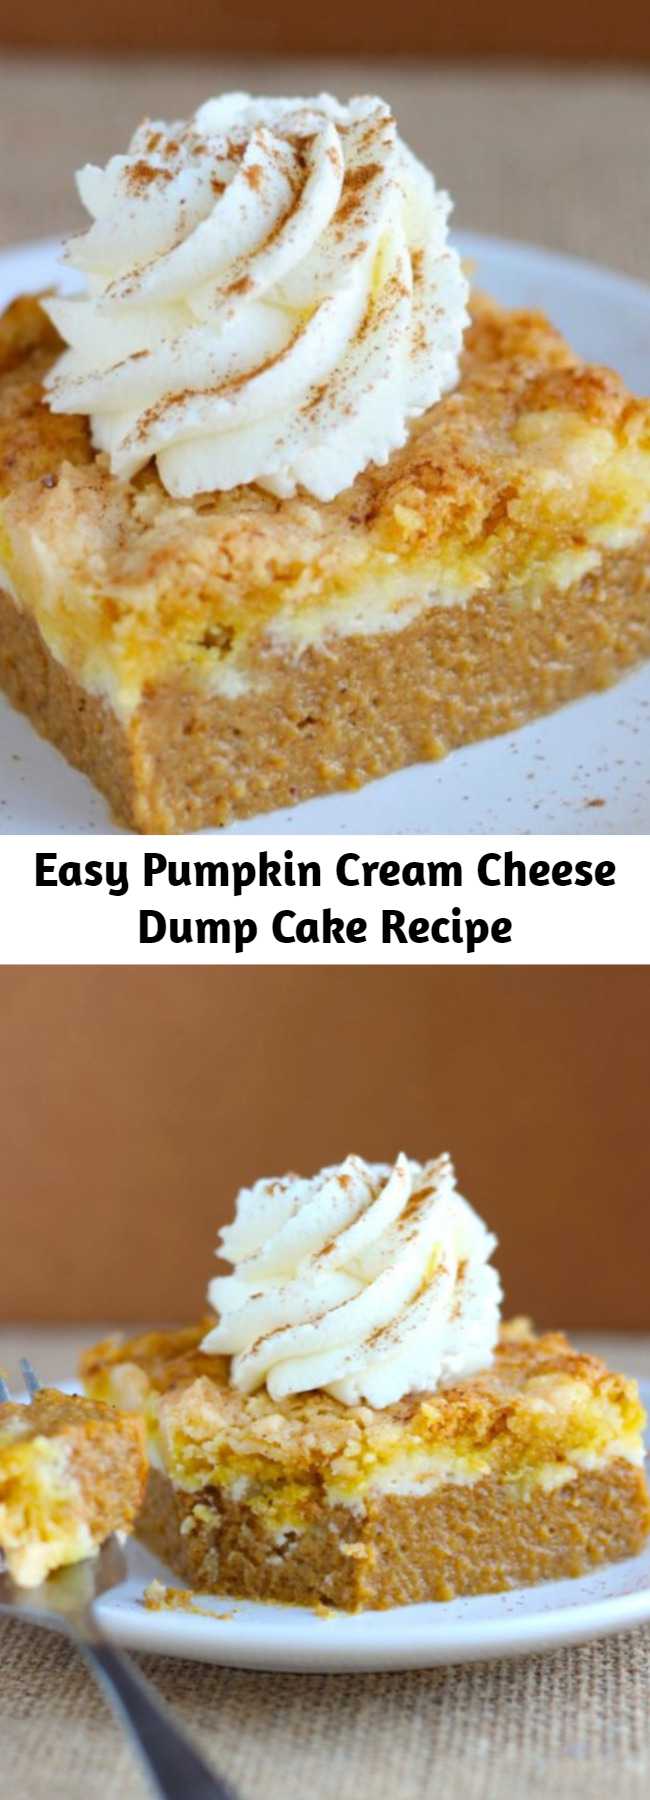 Pumpkin Cream Cheese Dump Cake Recipe - BETTER and way easier than pumpkin pie! This Pumpkin Cream Cheese Dump Cake is the best way to serve pumpkin pie to a crowd!